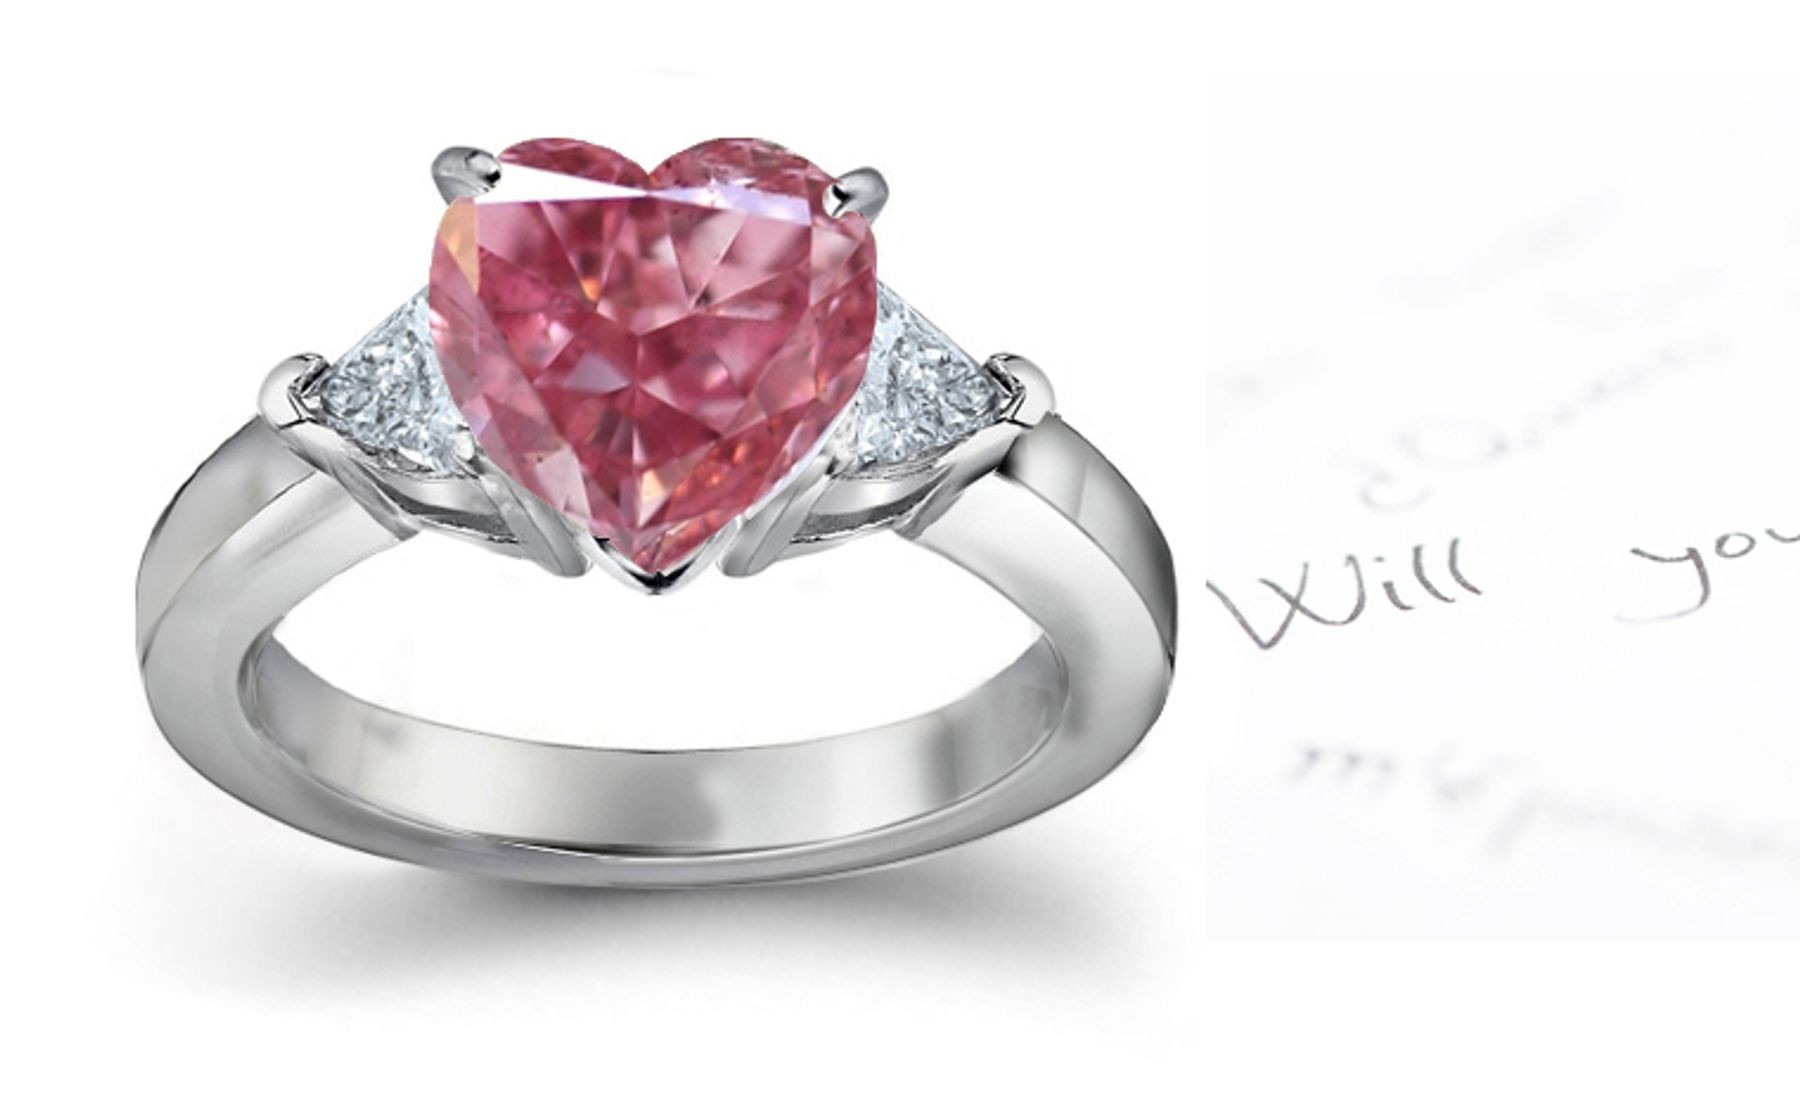 Exquisite Center Heart Pink Diamond & Triangular White Diamond Engagement Ring in Pink Gold